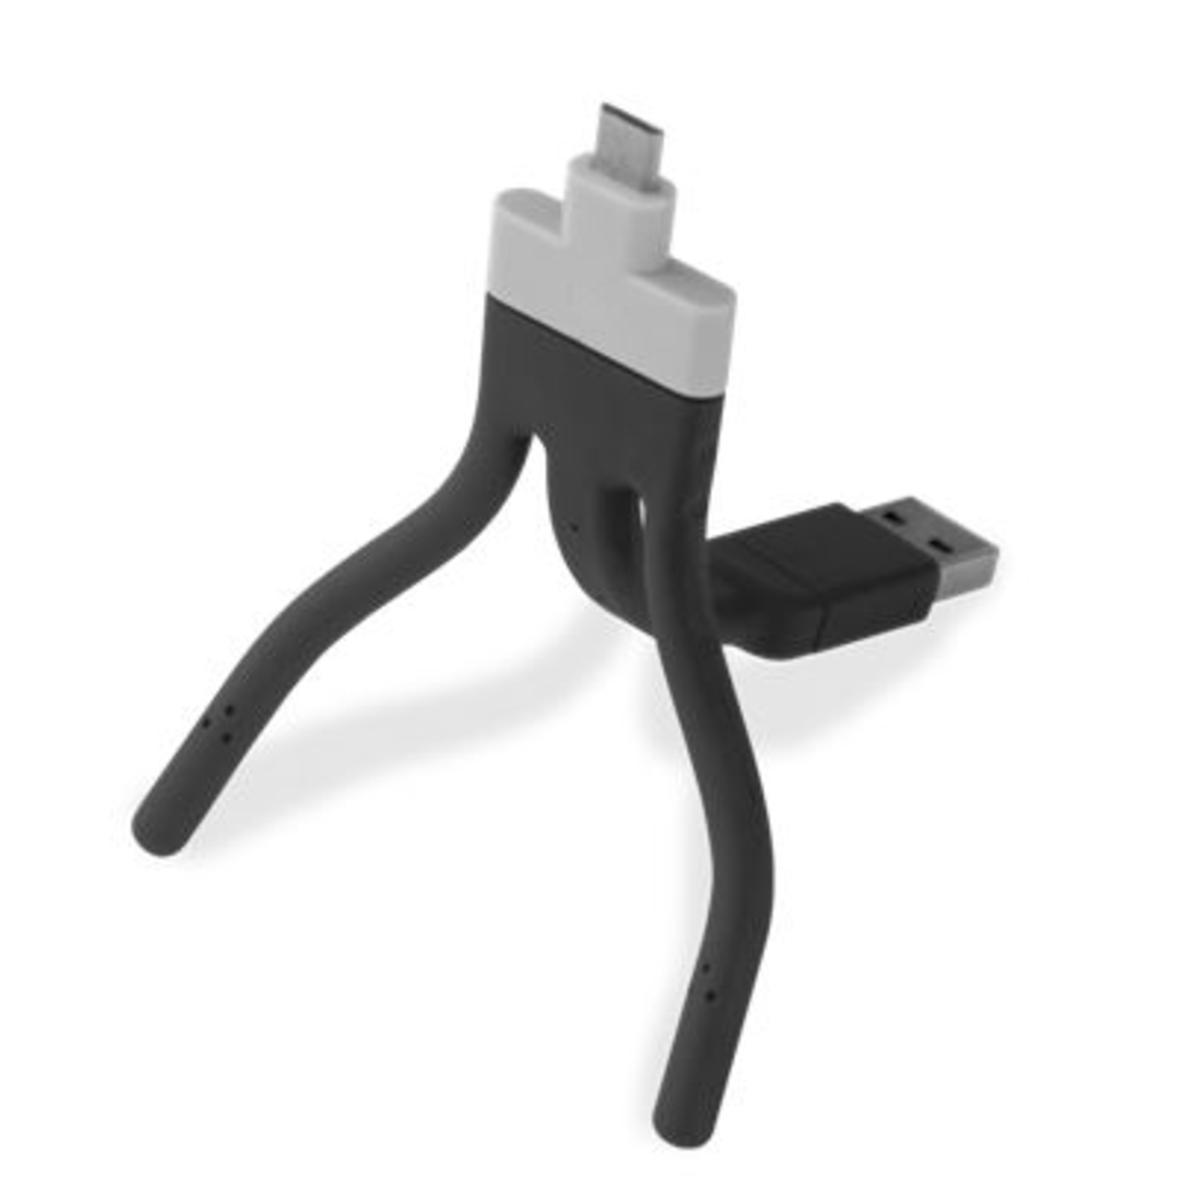 Support et branchement smartphone USB/Micro USB - 107 x 27 x 10.6 mm - Noir